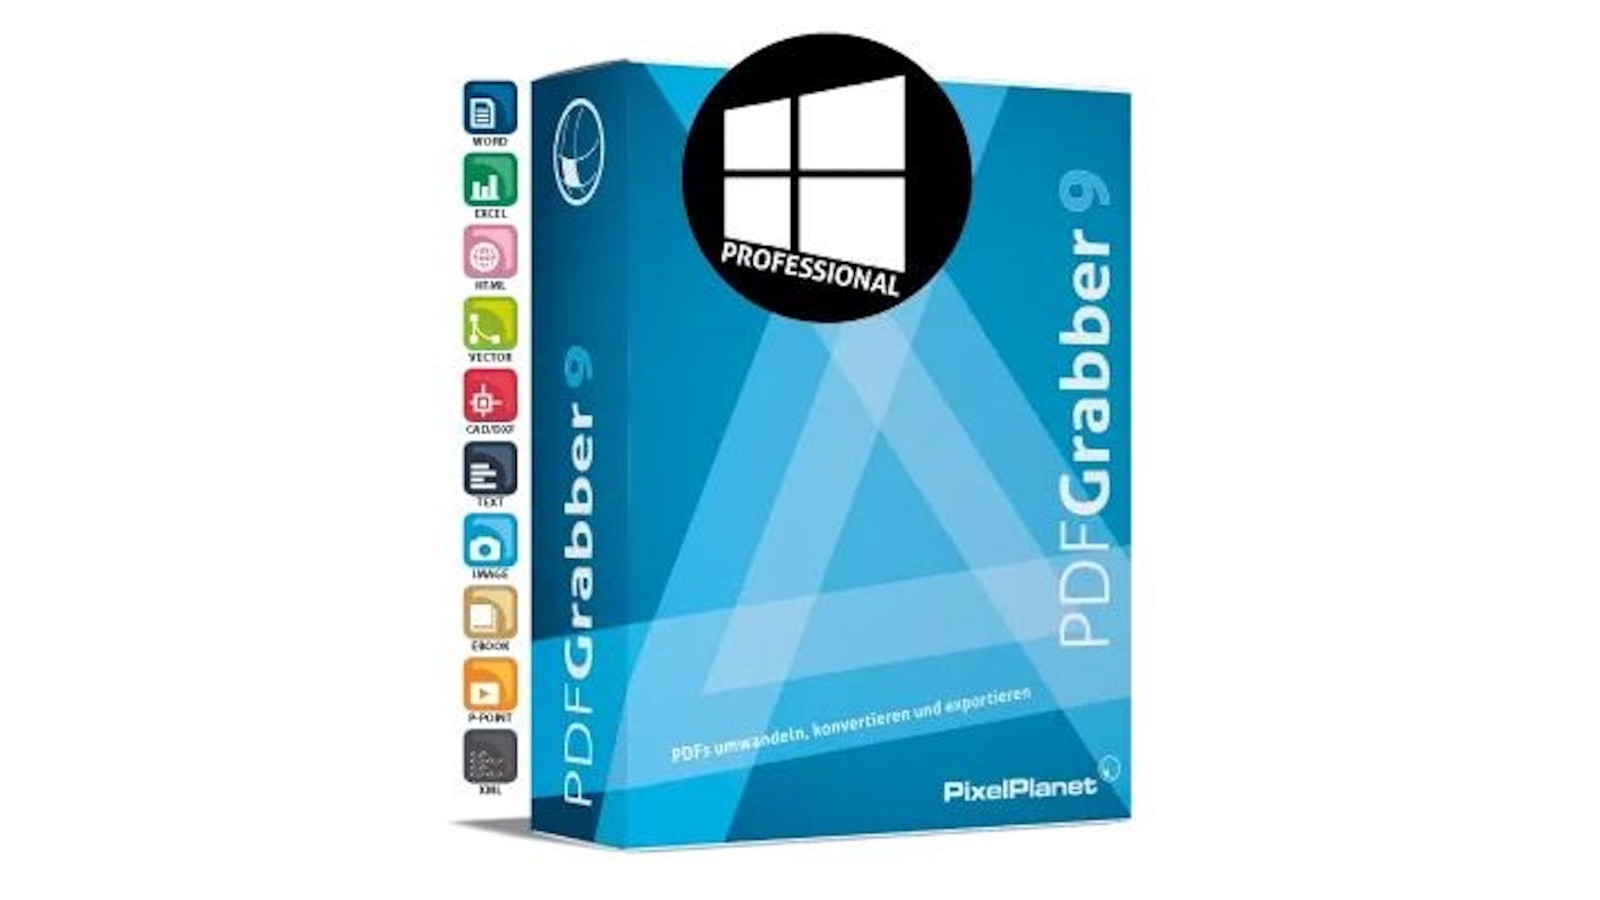 [$ 7.74] PixelPlanet PdfGrabber 9 Professional Network Licence Key (Lifetime / 5 Users)